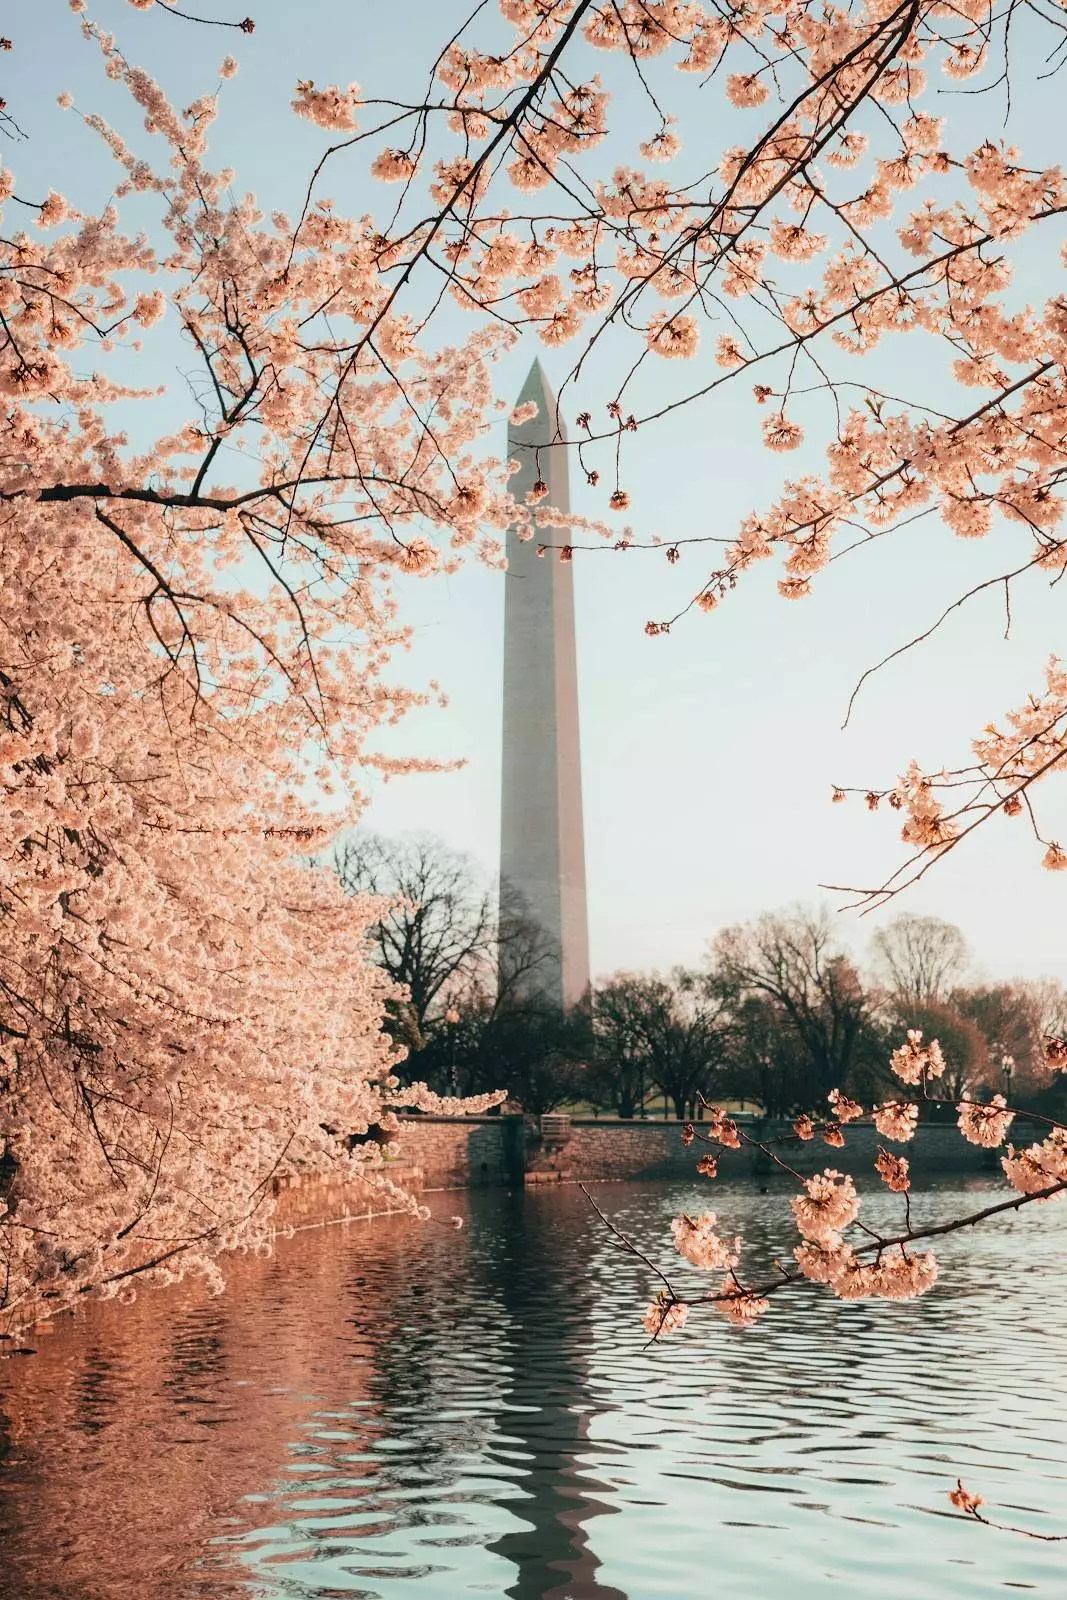 5 Best Places To Visit In Washington D.C.